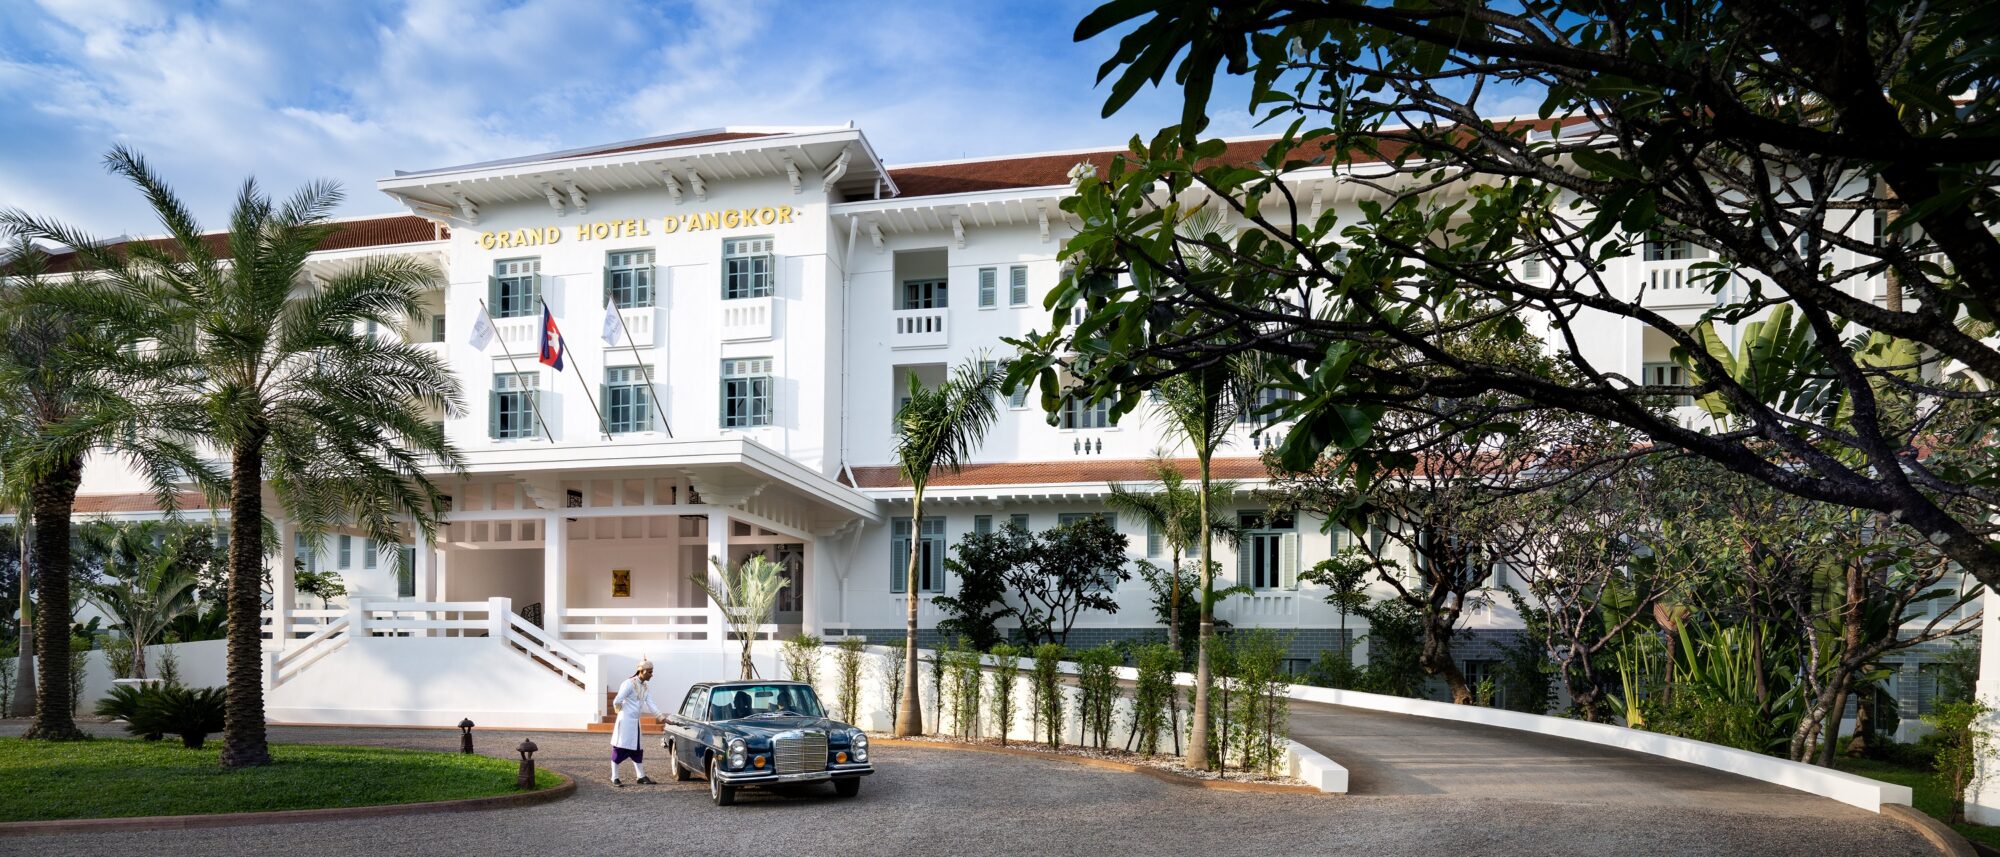 Raffles-Grand-Hotel-dAngkor-The-Heritage-Wing.jpg